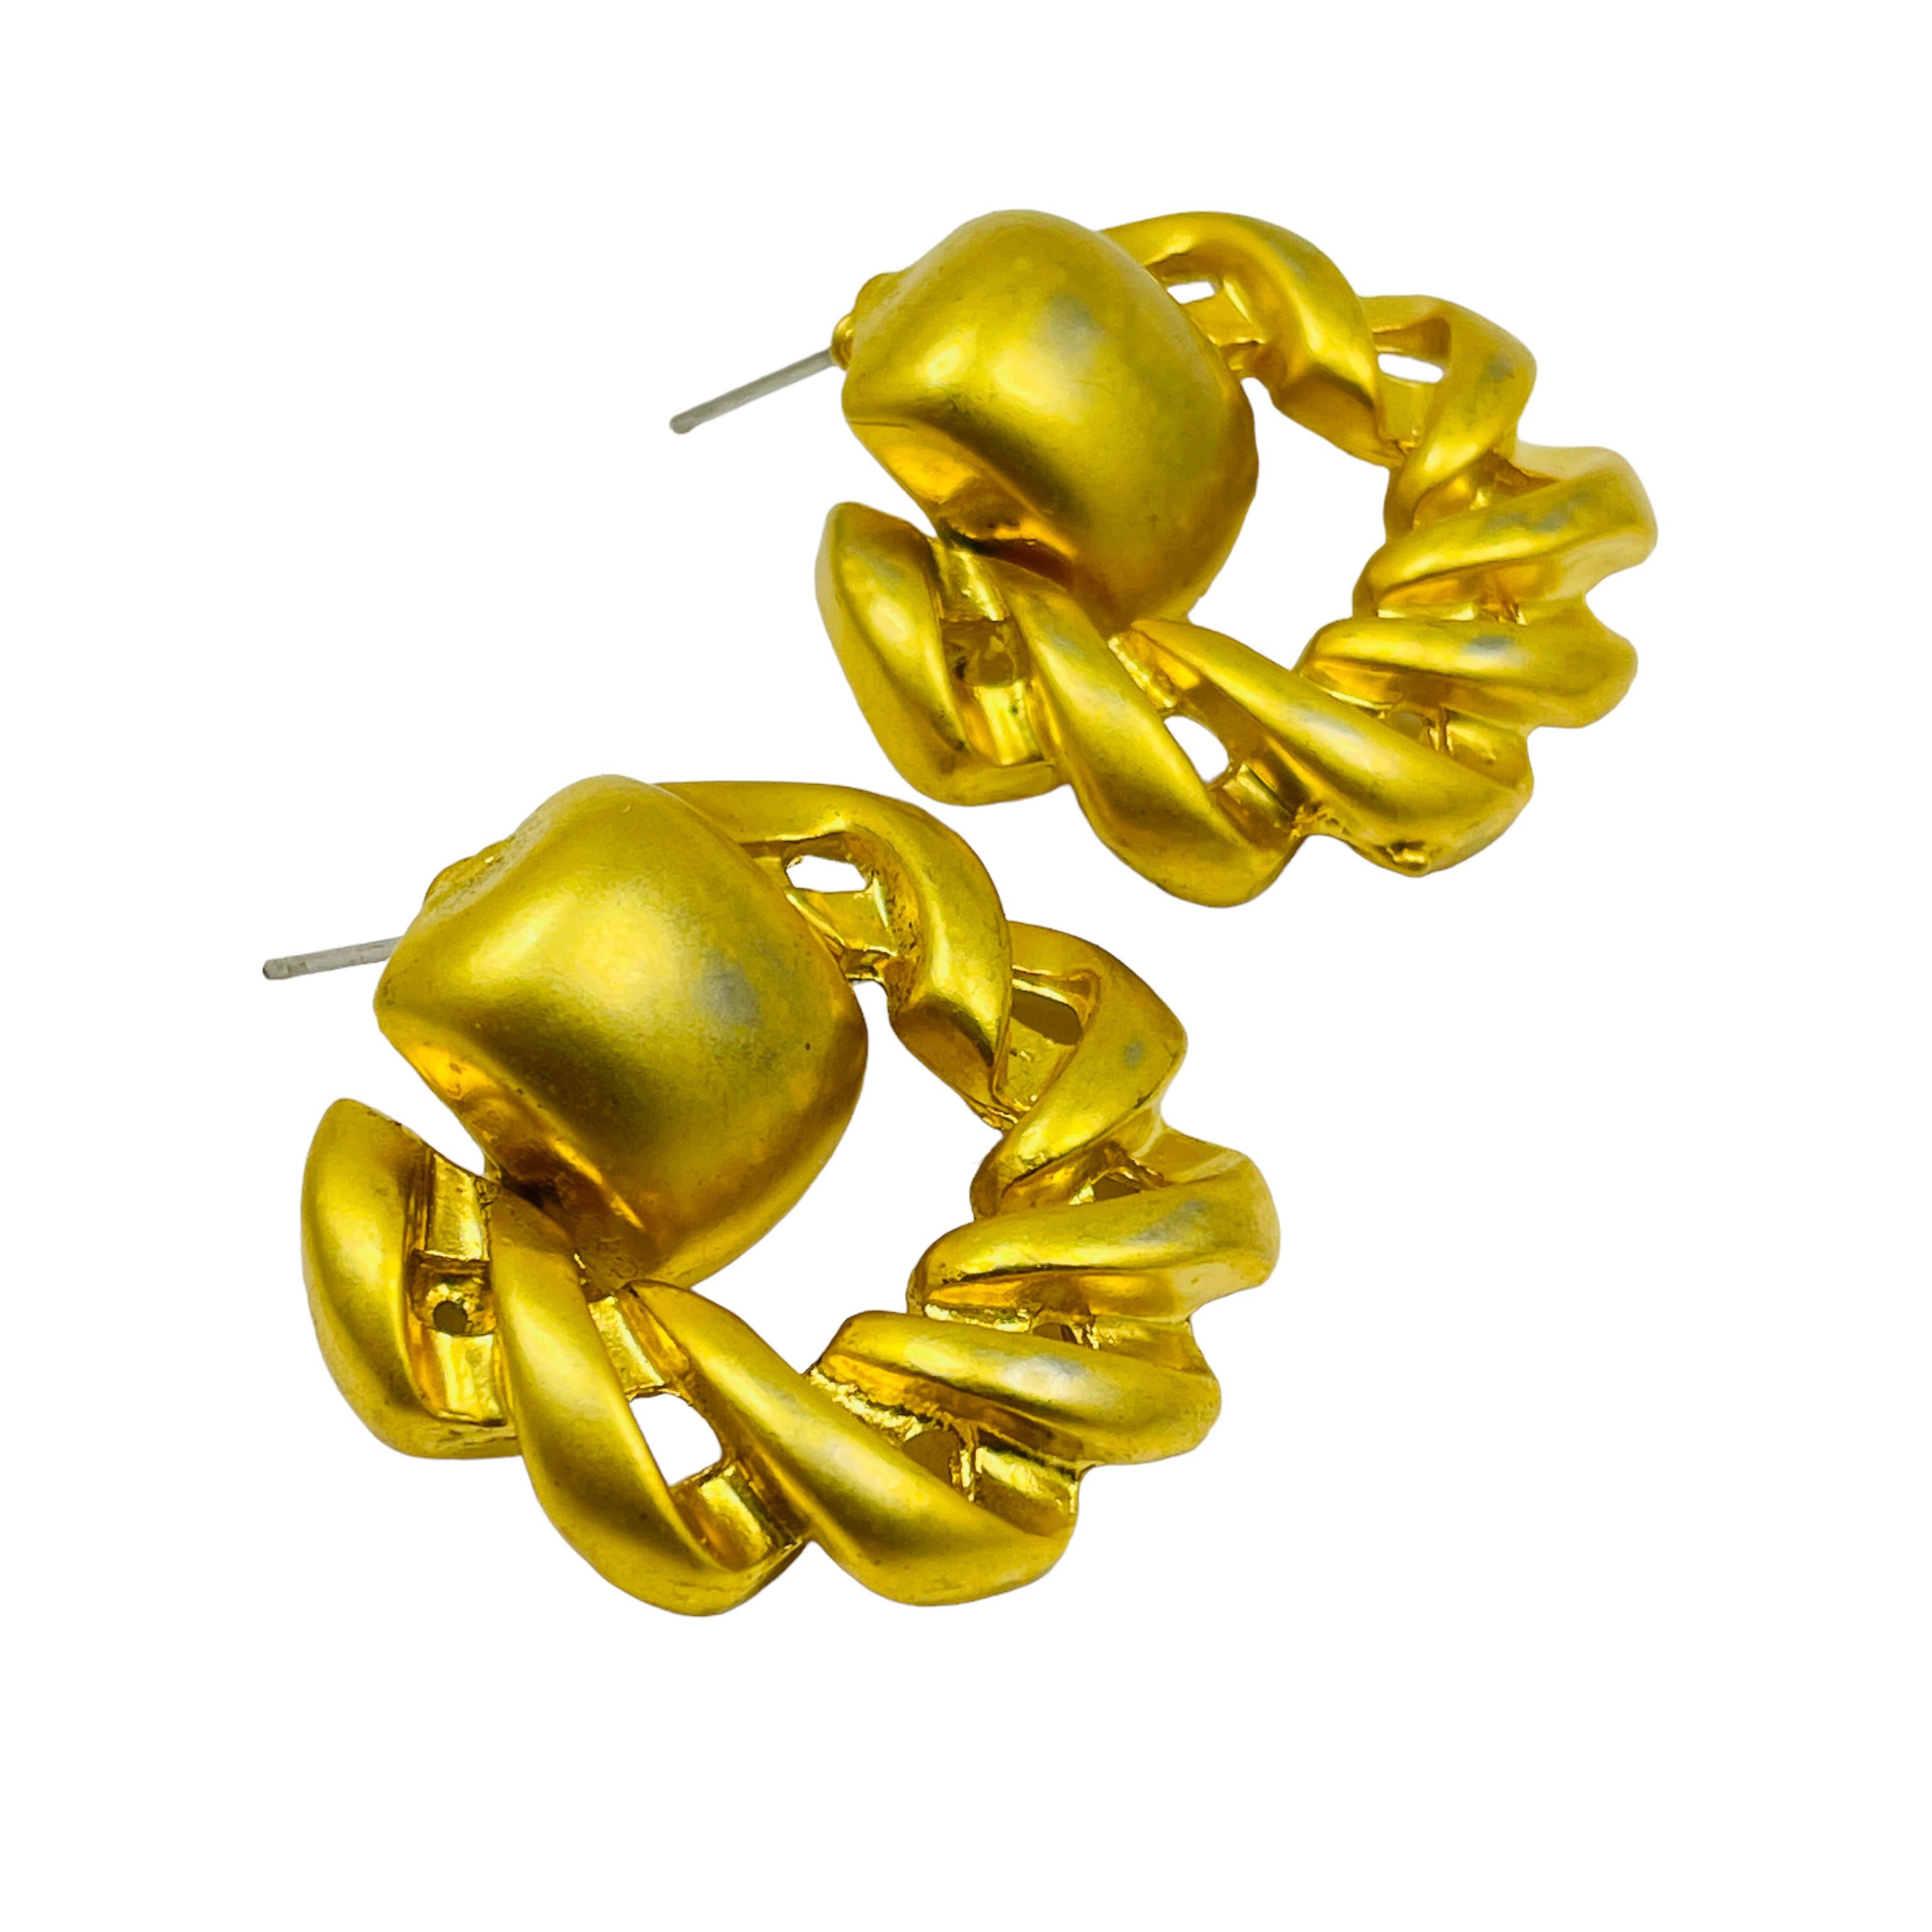 DETAILS

• unsigned

• gold tone 

• vintage designer clip on earrings

MEASUREMENTS

• 1.13